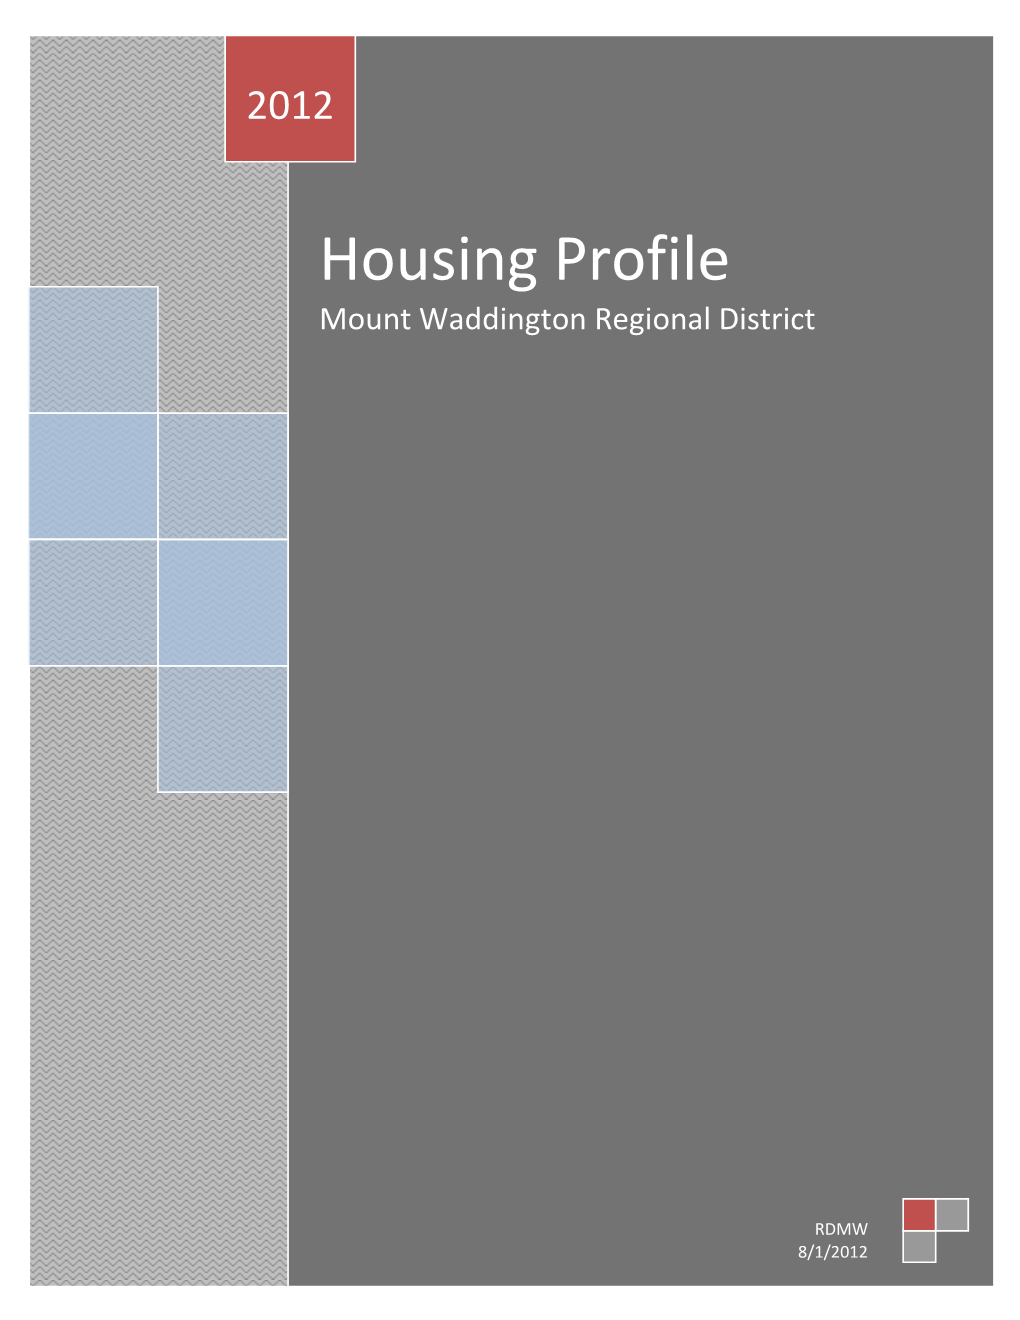 2012 Housing Profile